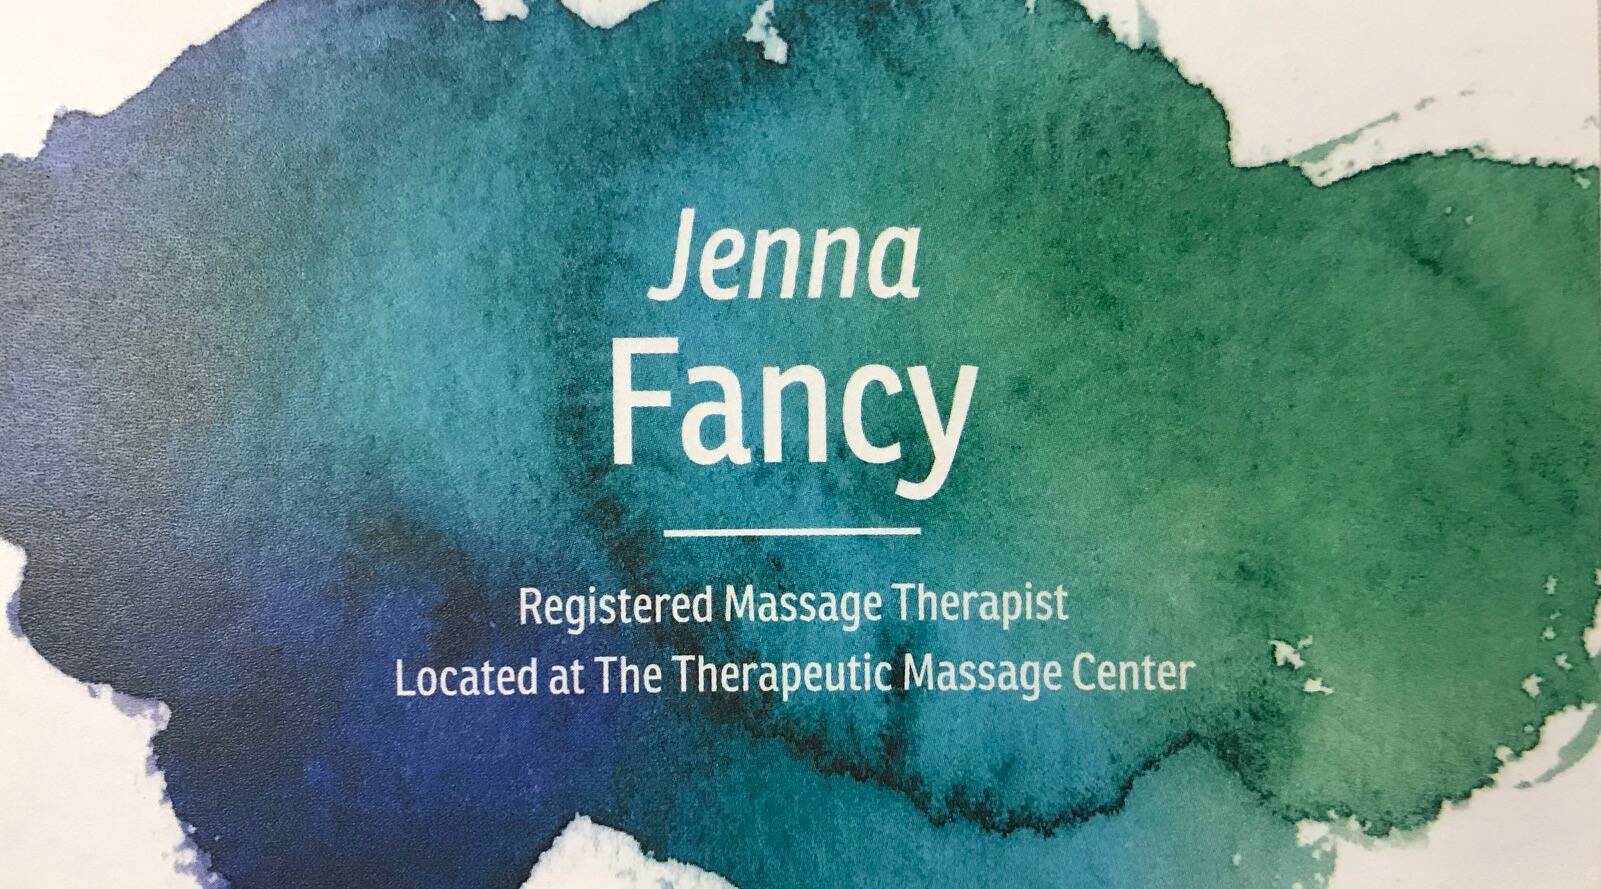 Jenna Fancy Registered Massage Therapist